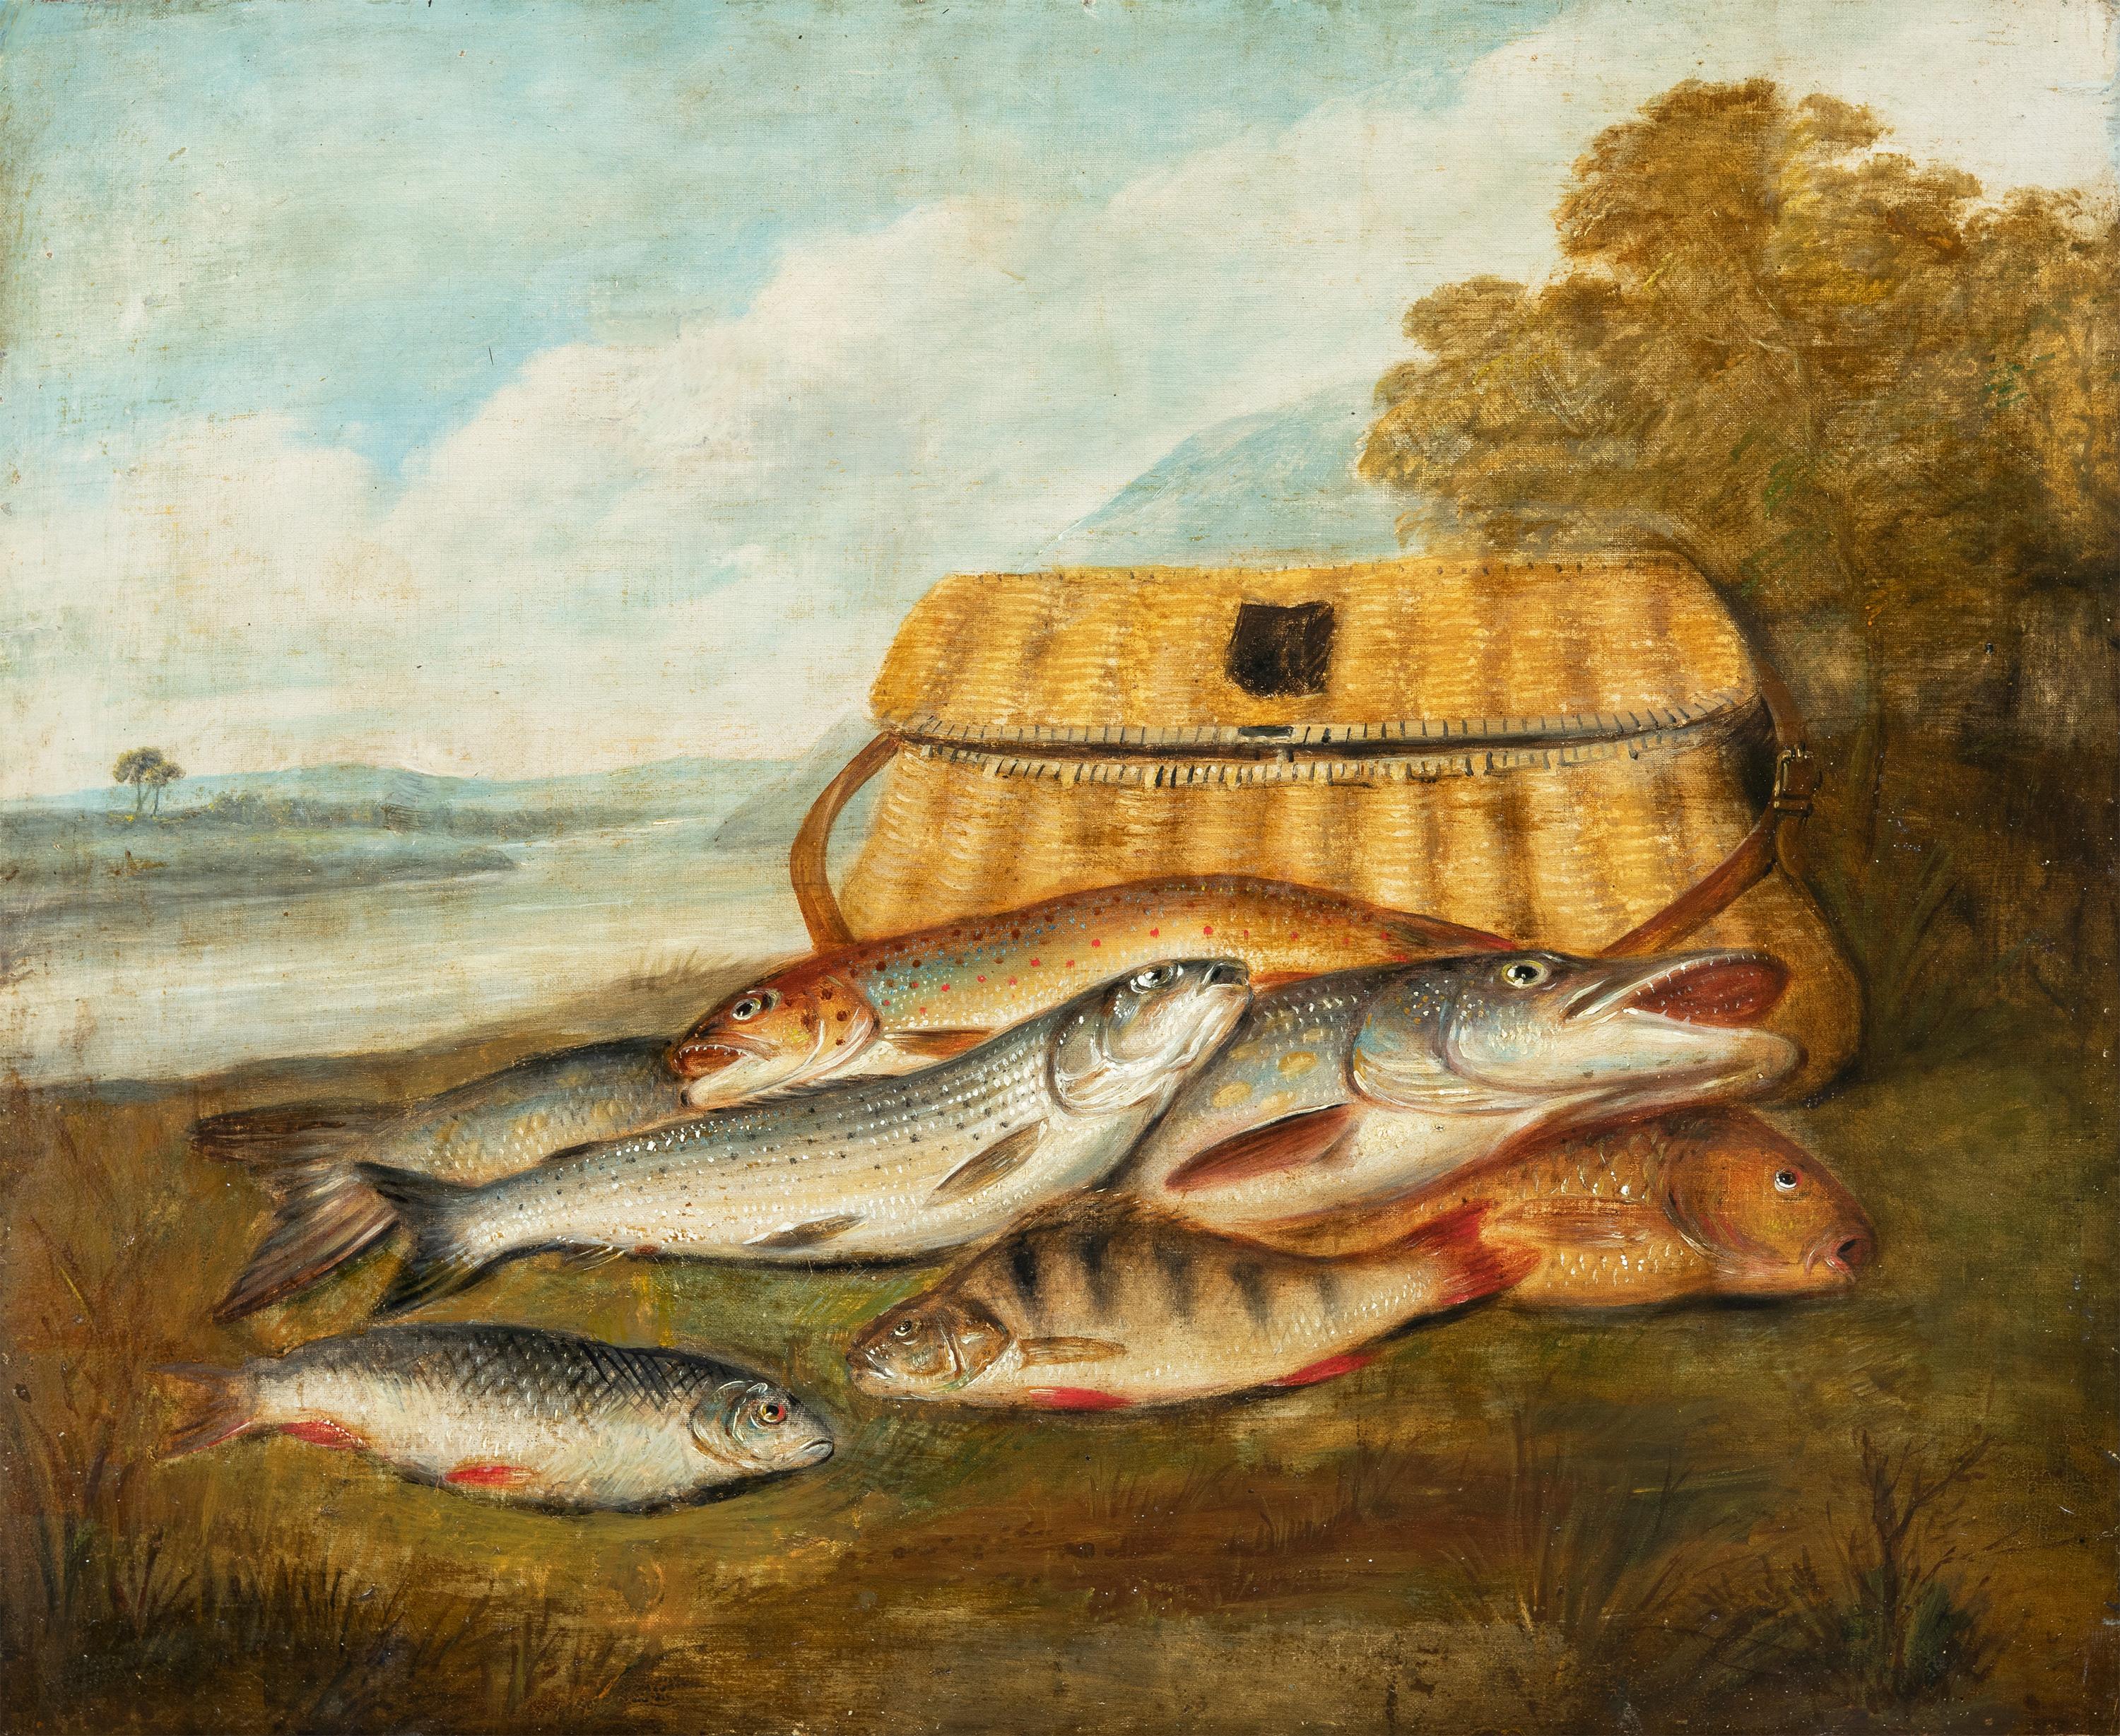 Unknown Landscape Painting - Naturalist painter (Dutch school) - 19th century Still life painting - Fish